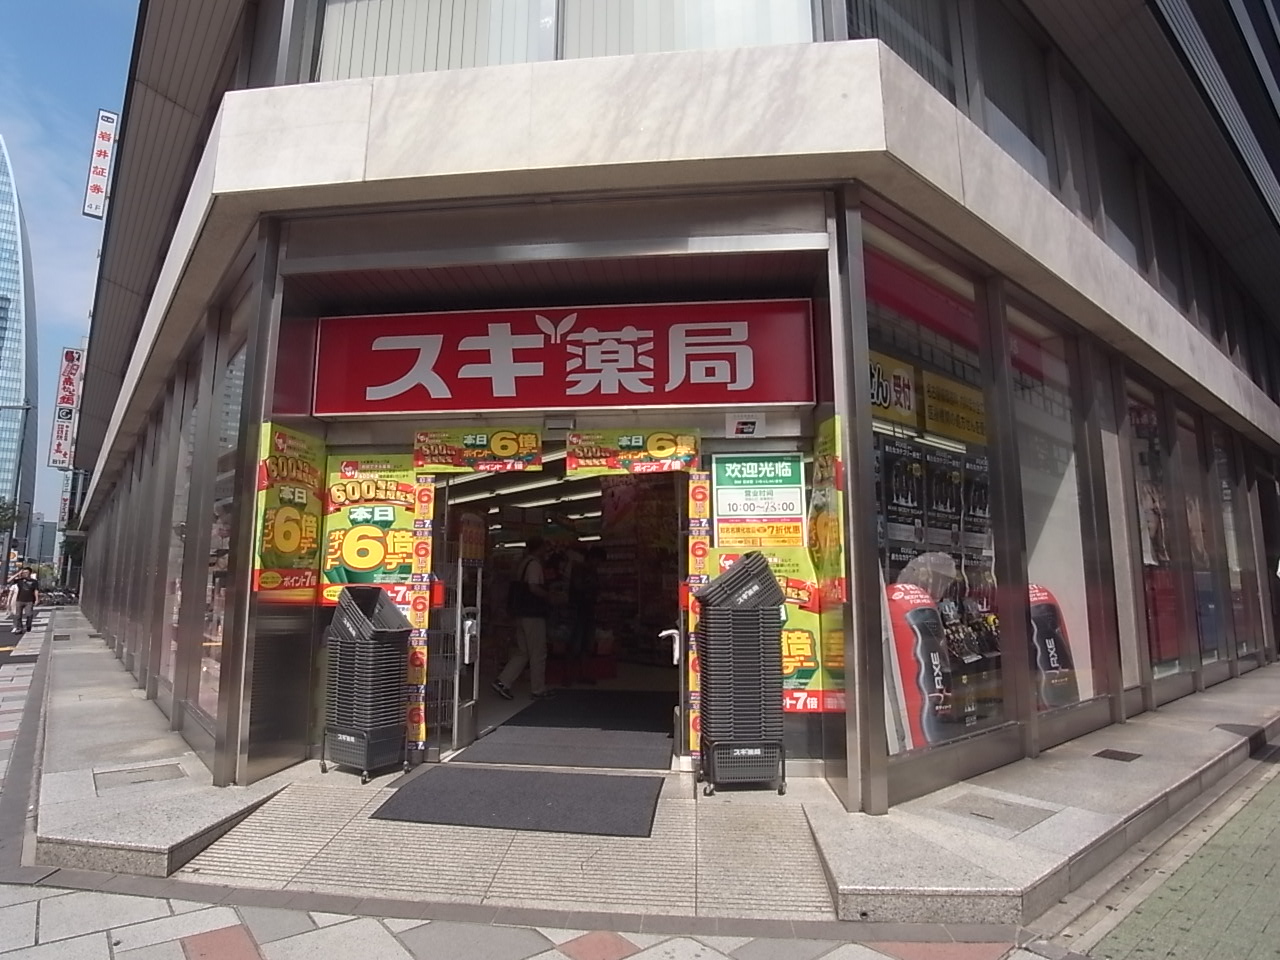 Dorakkusutoa. Cedar pharmacy Nagoya shop 664m until (drugstore)